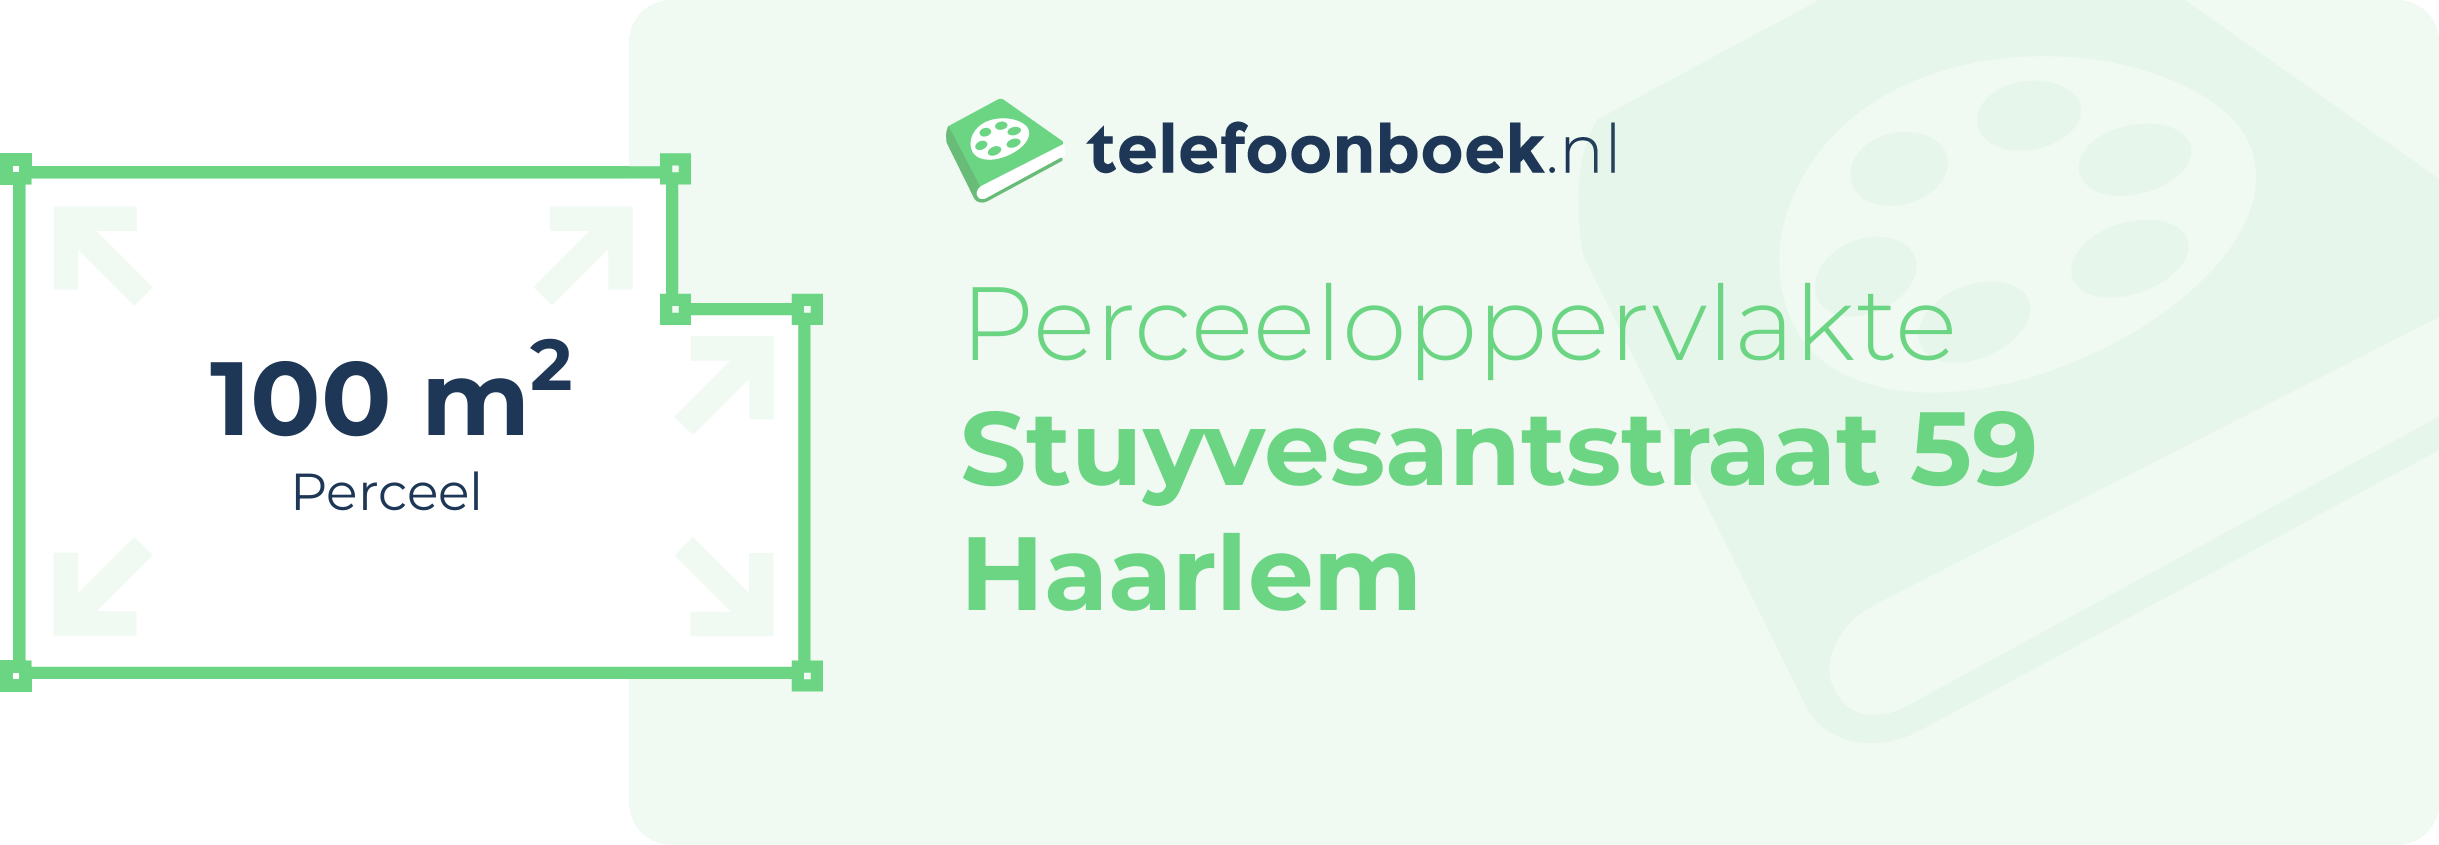 Perceeloppervlakte Stuyvesantstraat 59 Haarlem